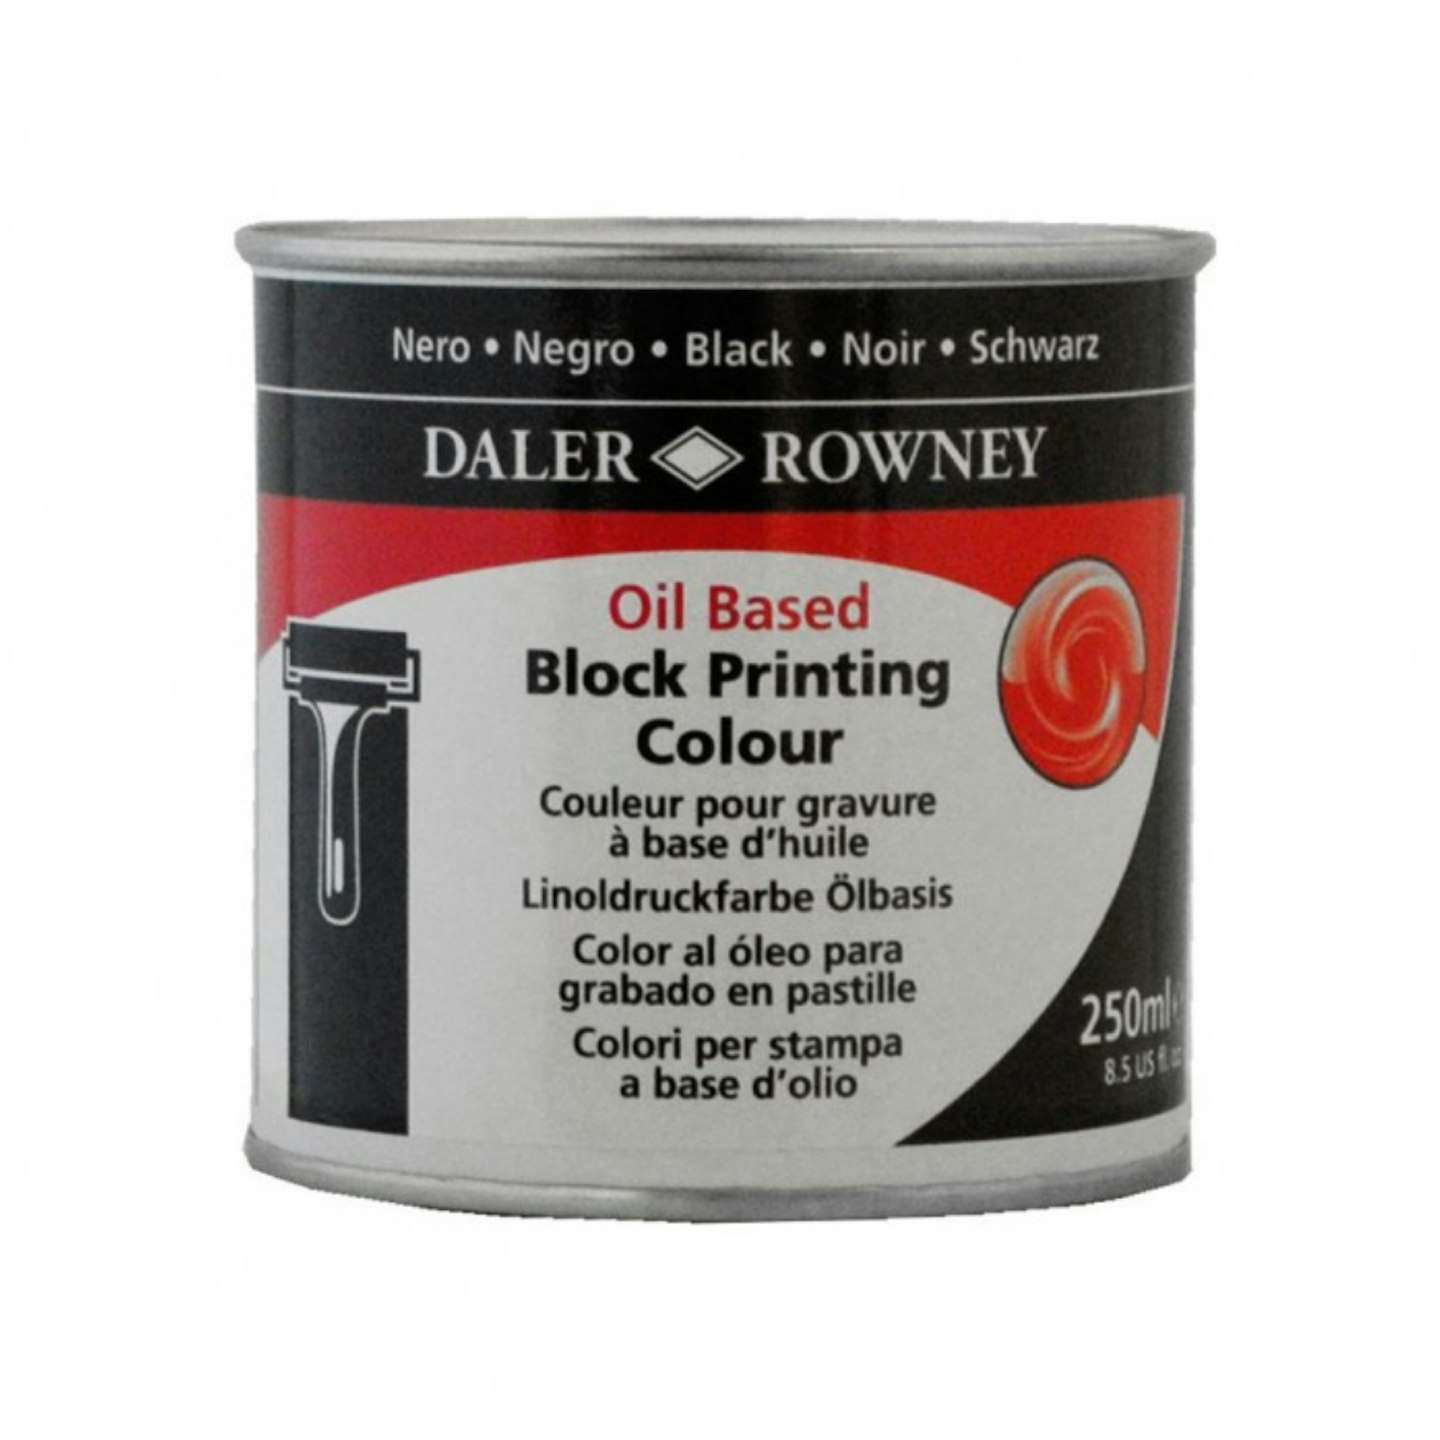 Daler Rowney Oil Based Block Printing Colour